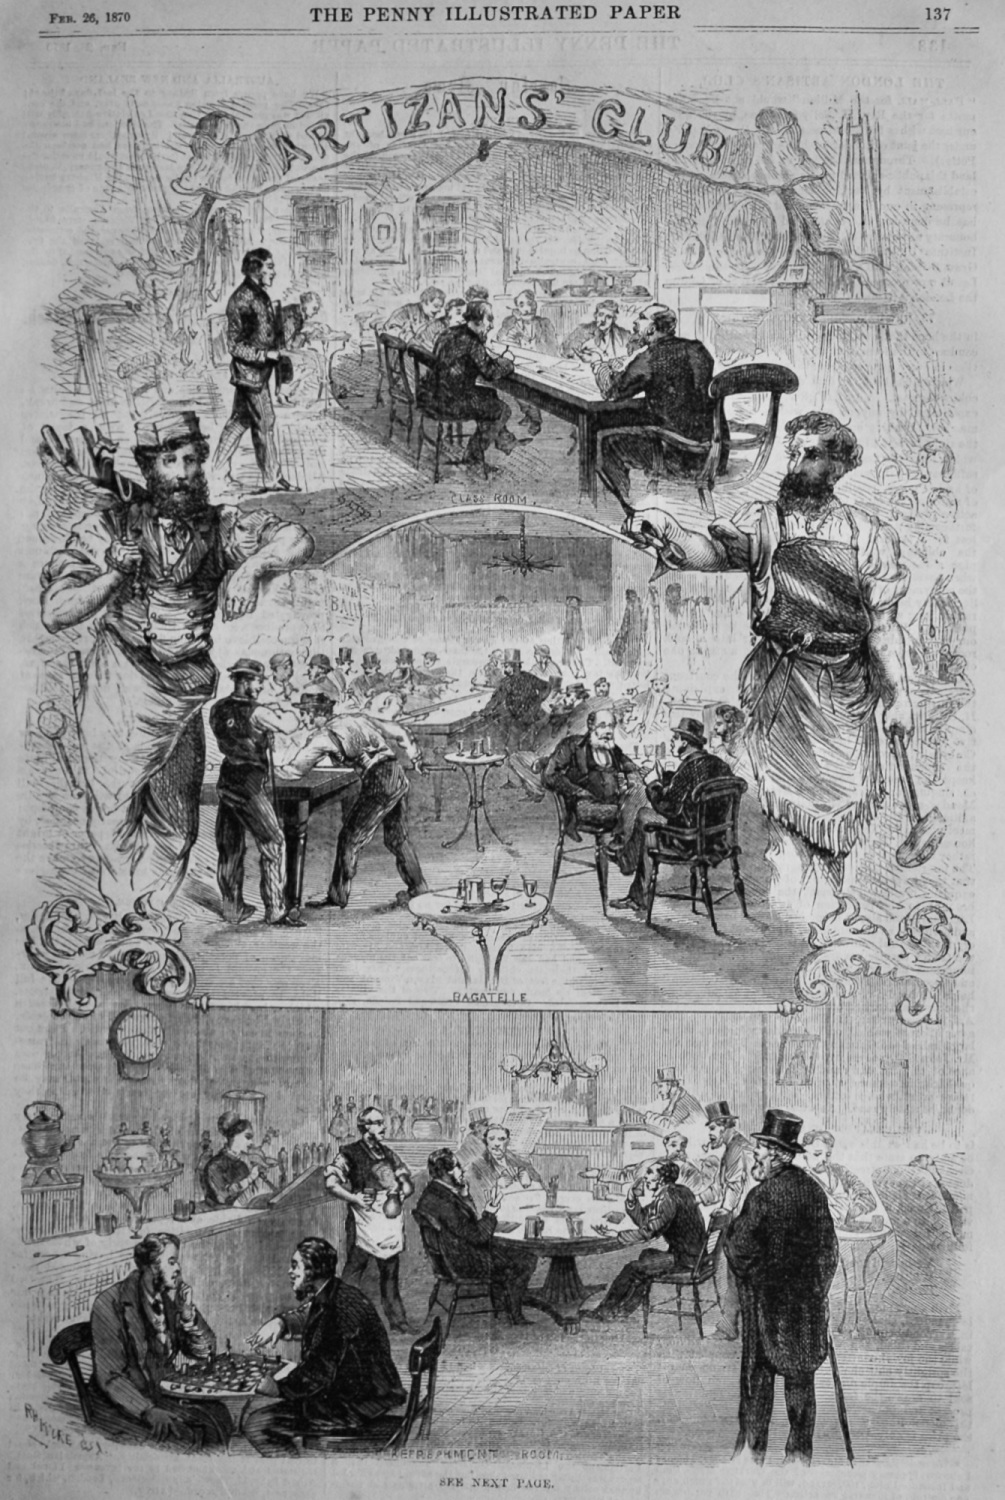 Artizan's Club.  1870.